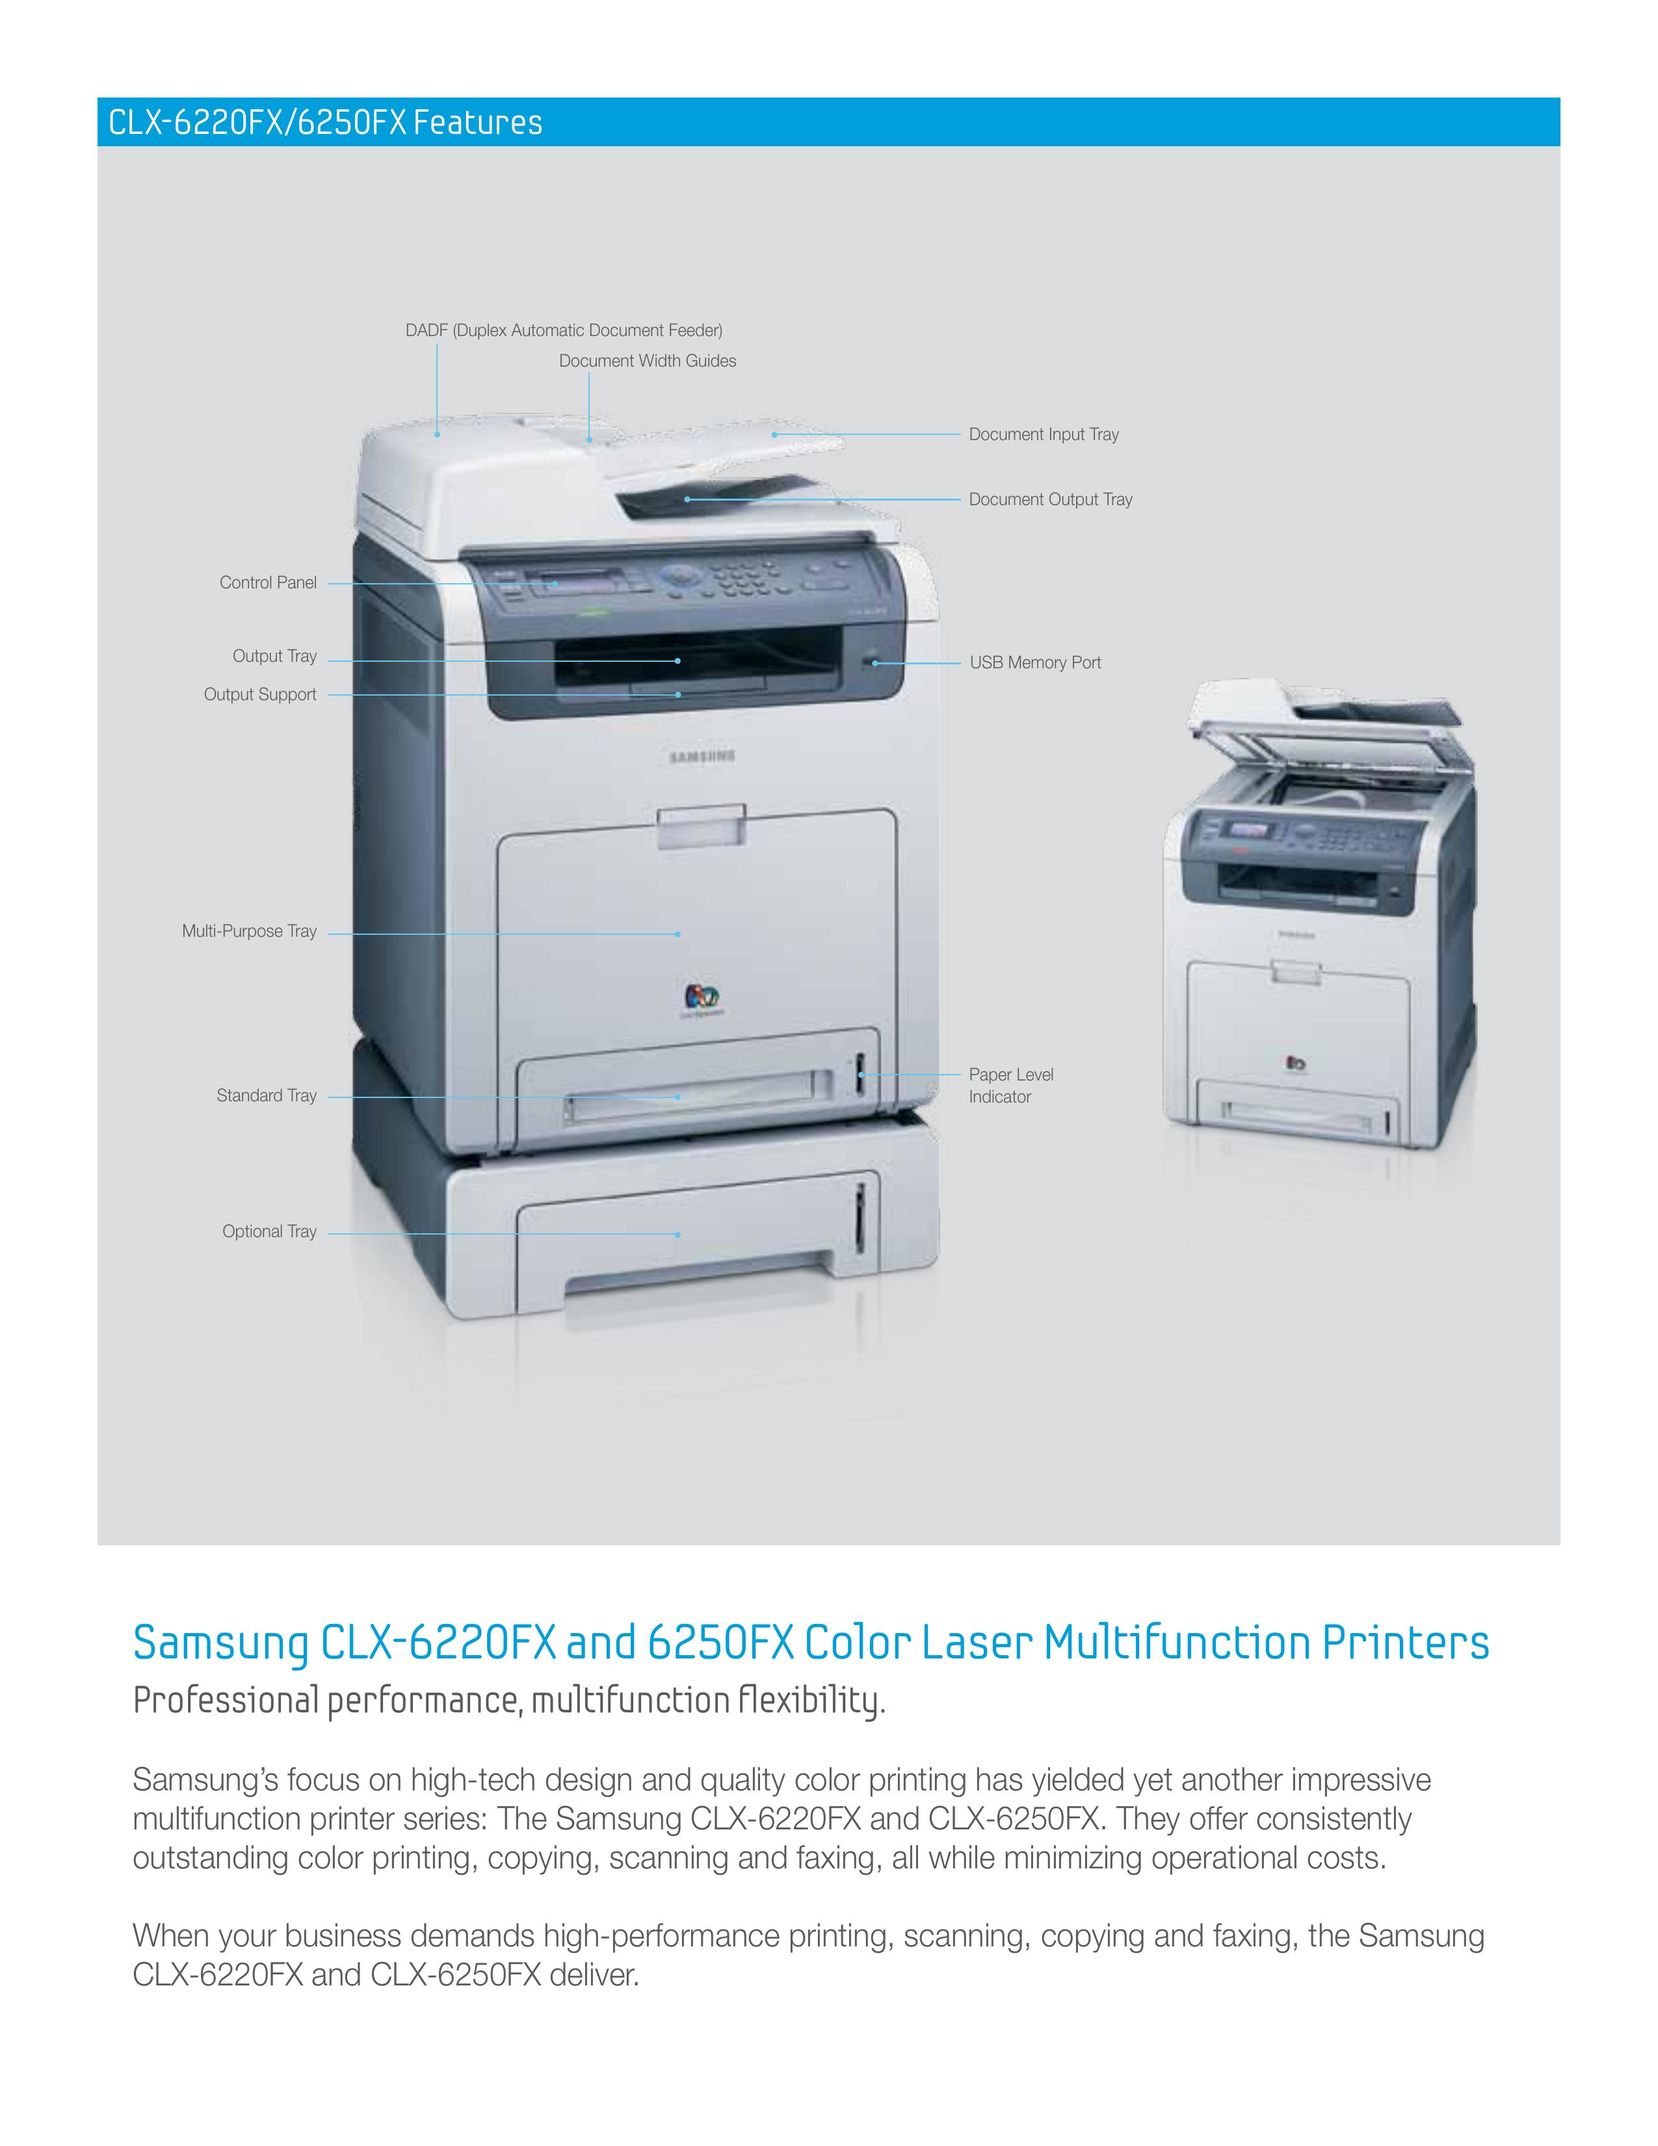 Samsung CLX-6250FX All in One Printer User Manual